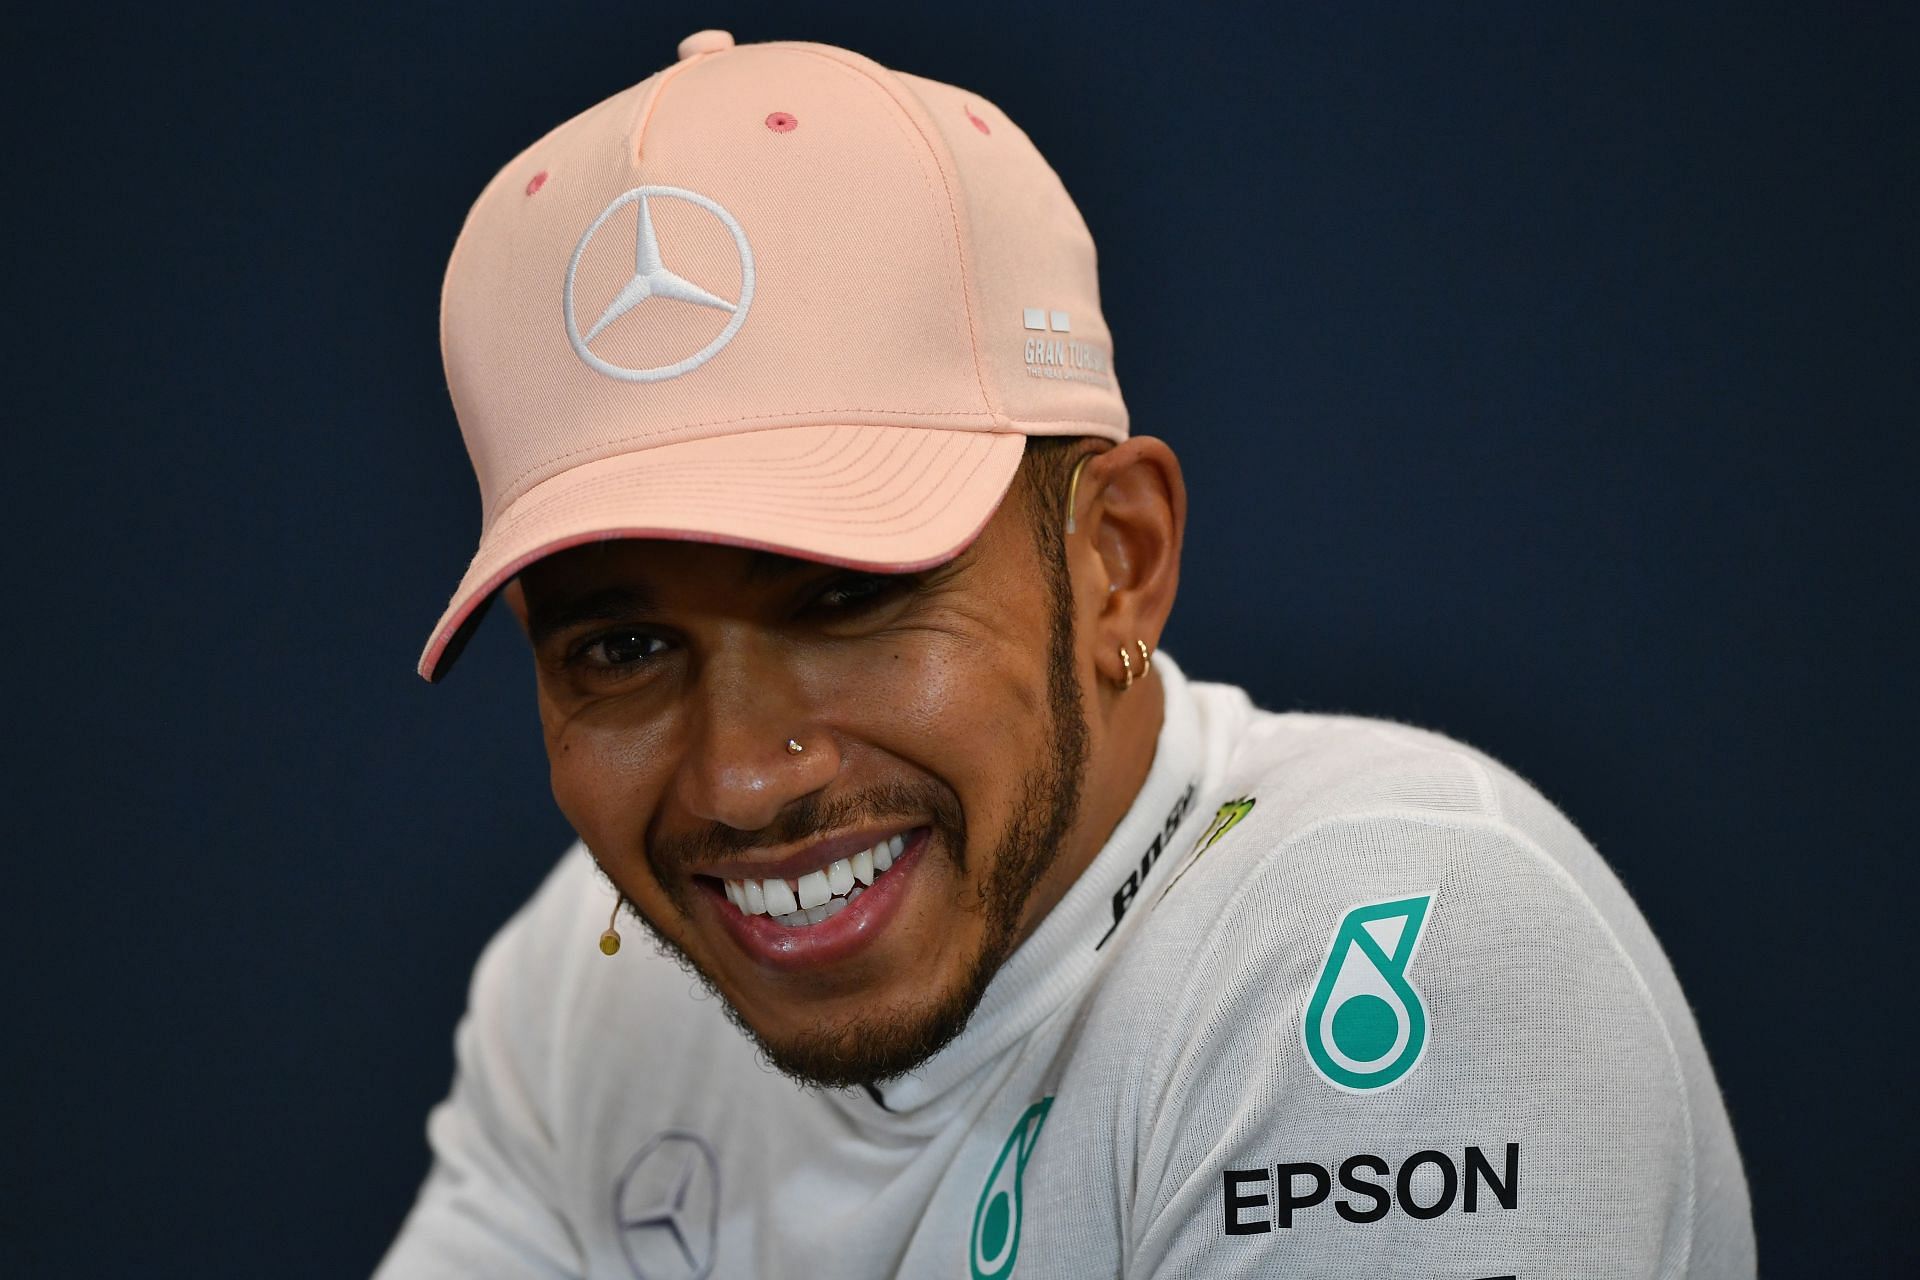 Lewis Hamilton at the 2018 Monaco Grand Prix (Photo by Dan Mullan/Getty Images)